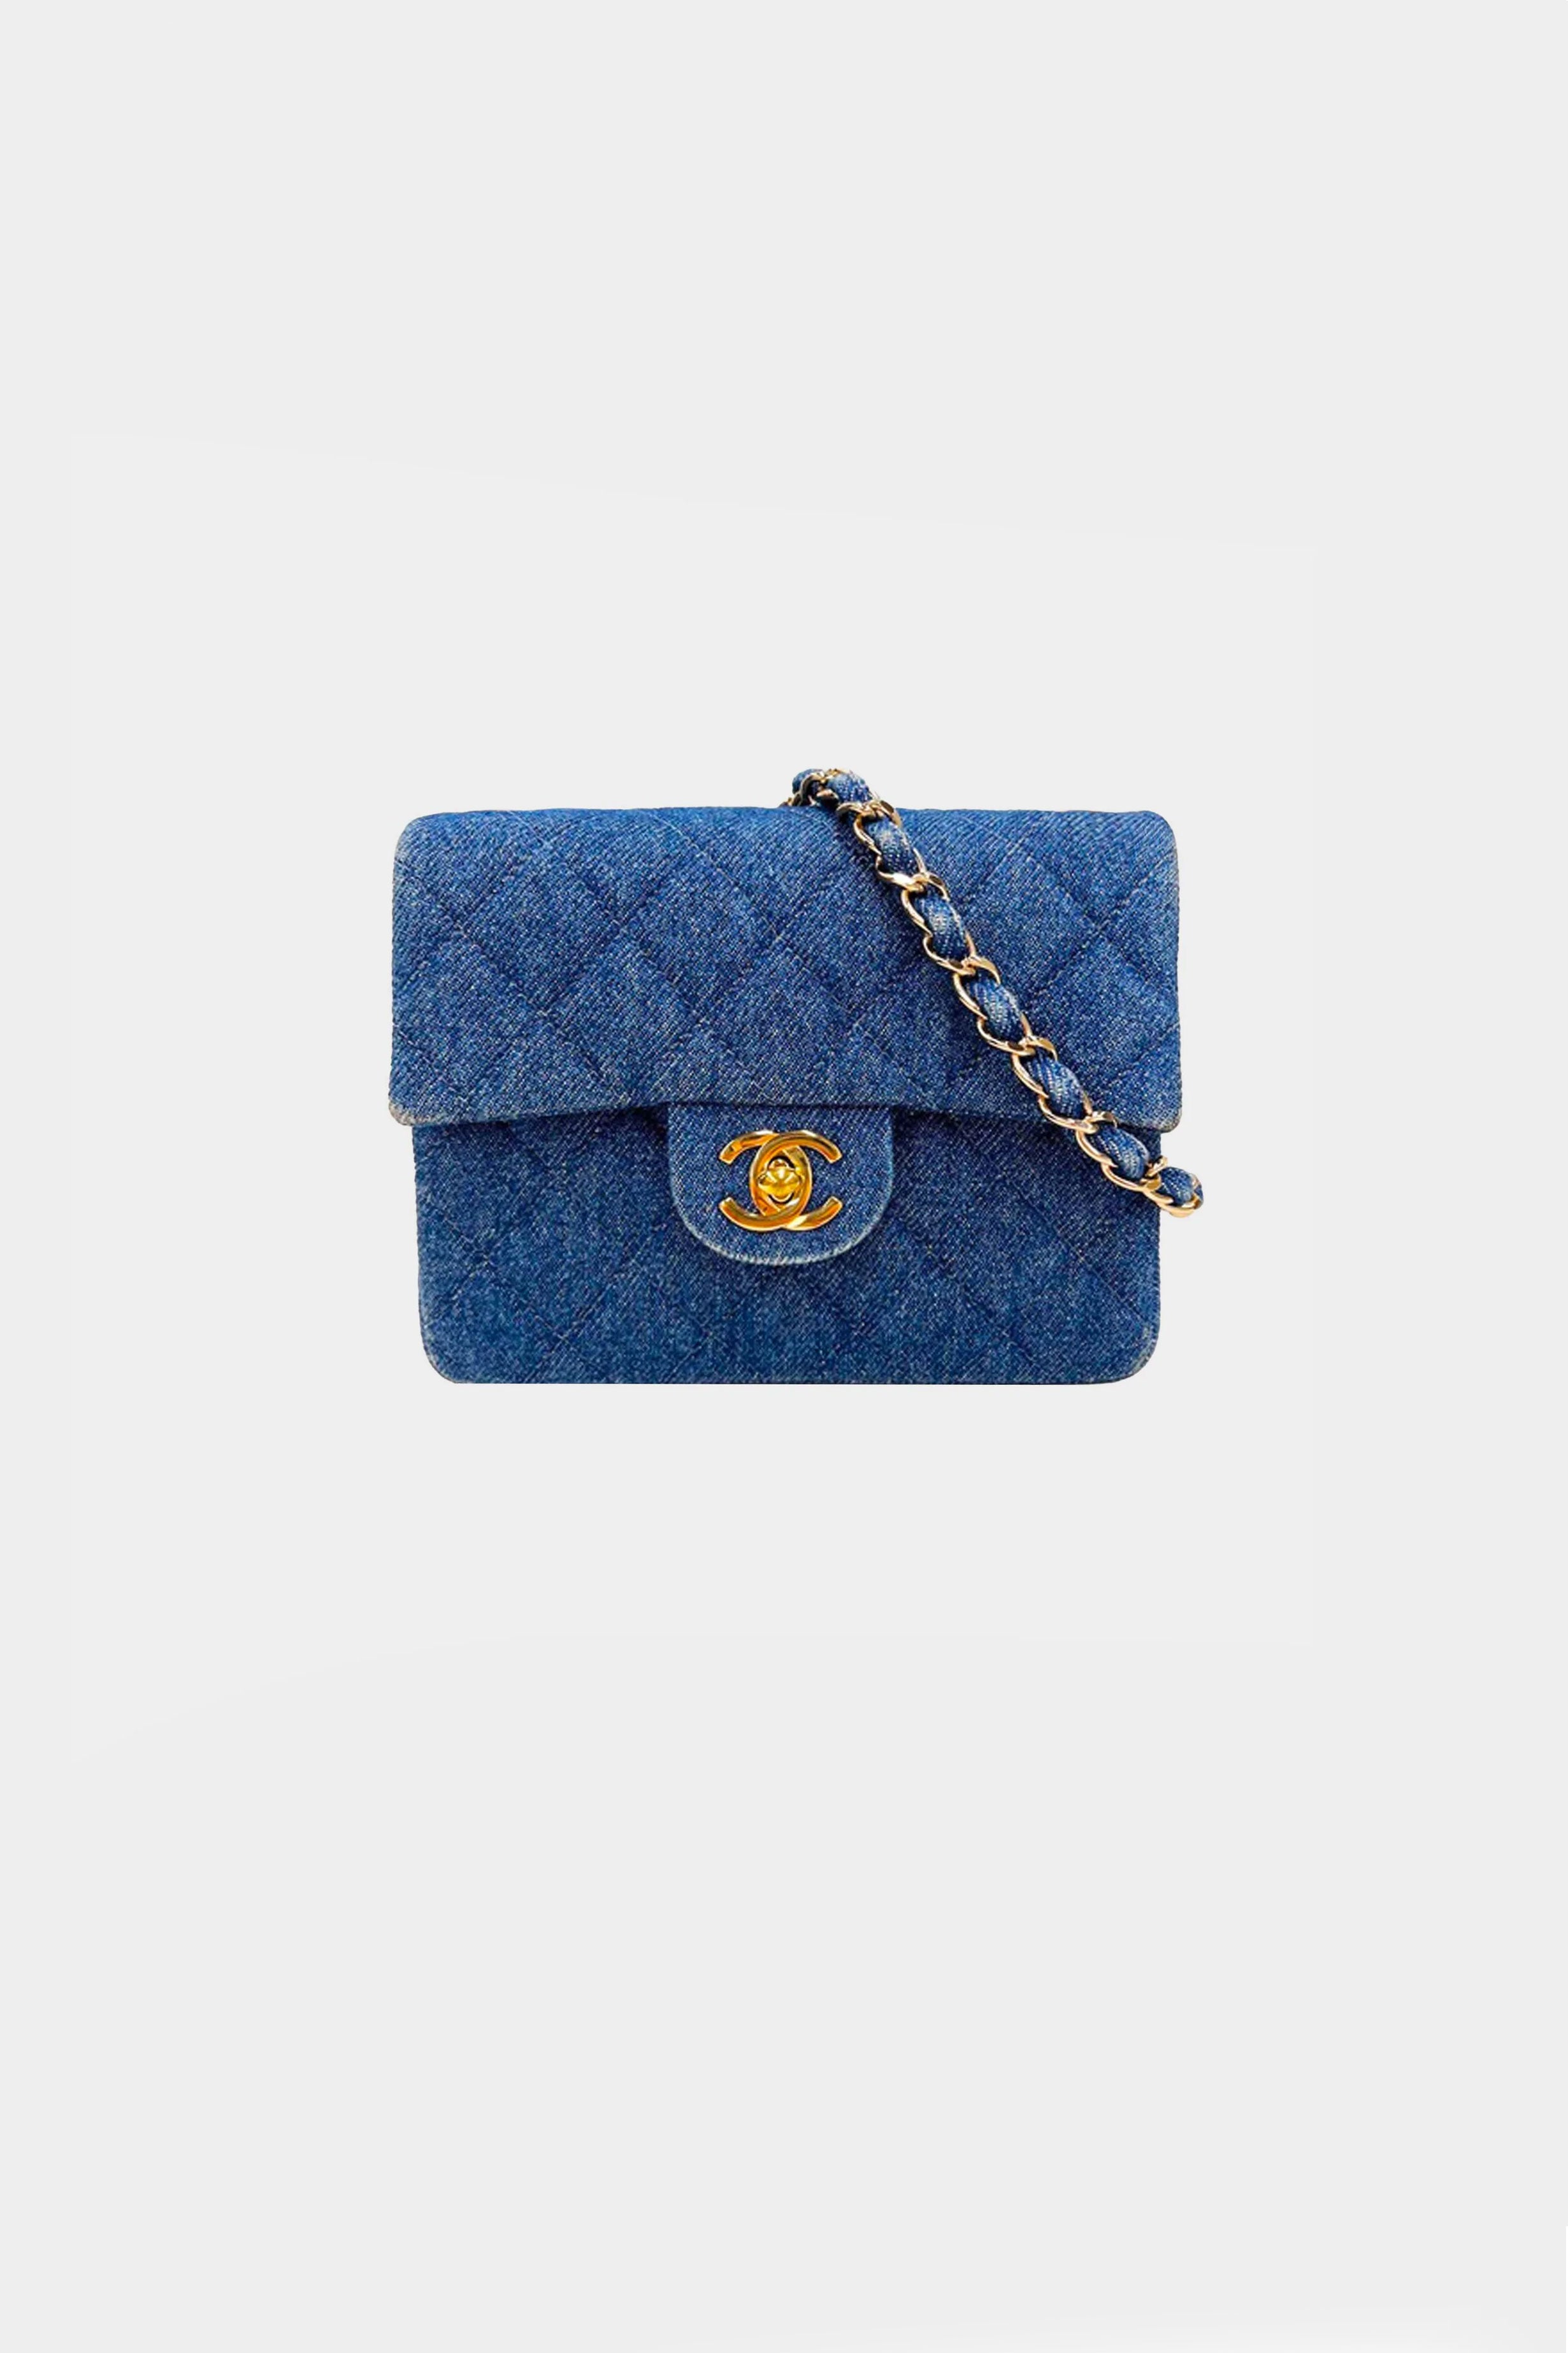 Chanel 2014 Paris-Dallas Denim Flap Bag · INTO